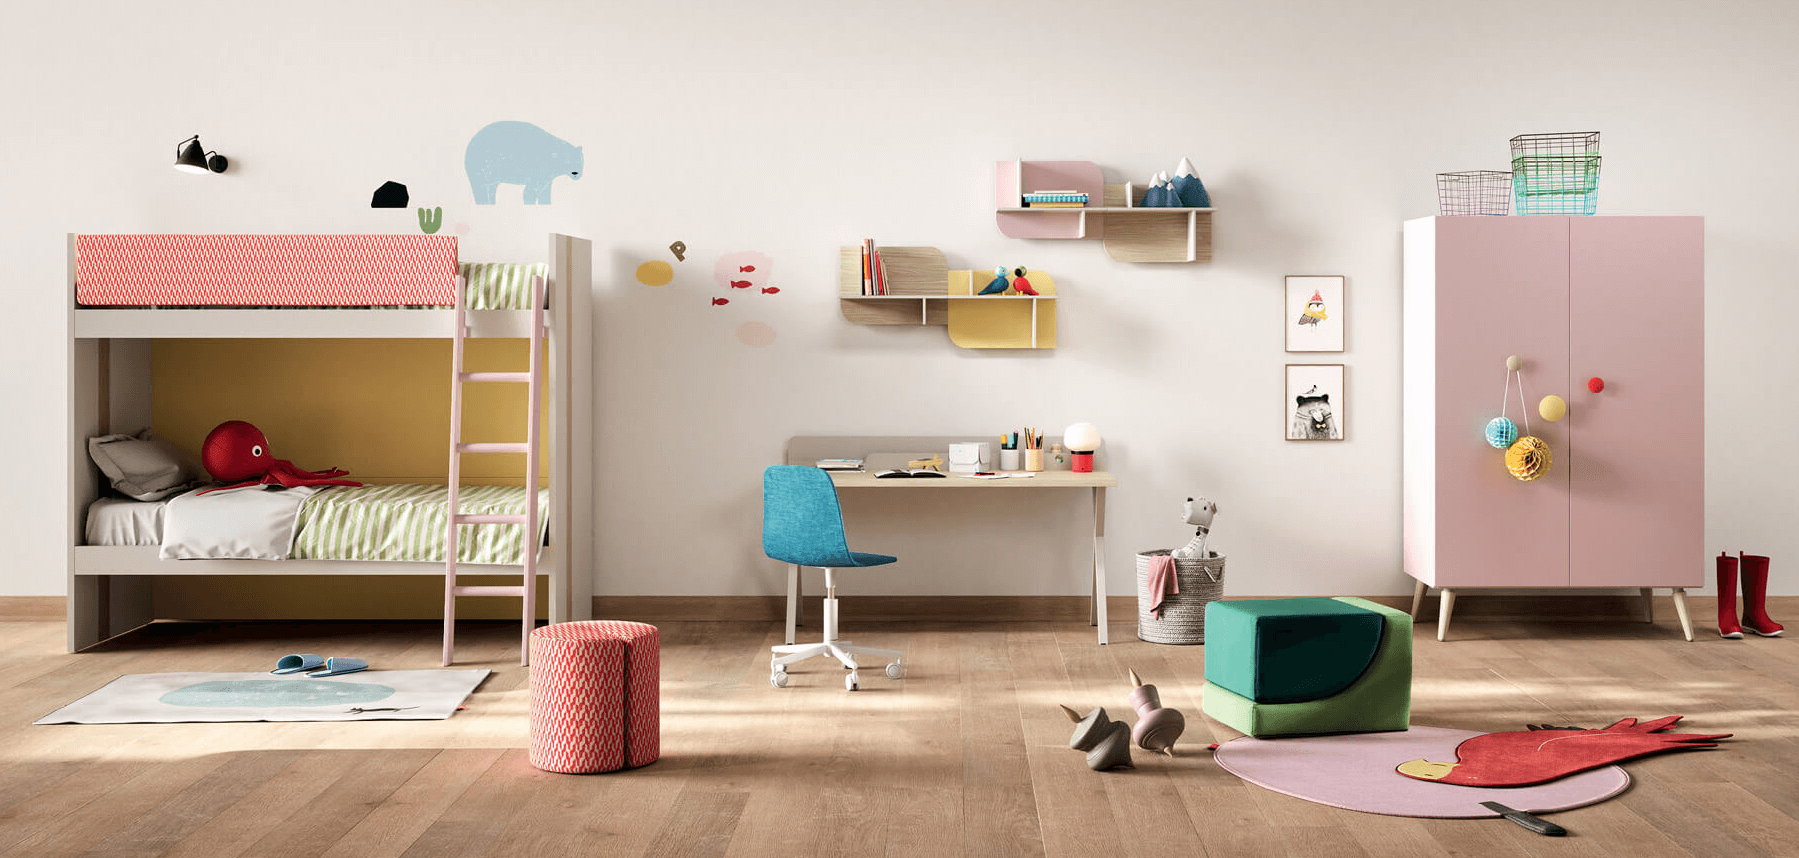 childrens bedroom furniture set amazon